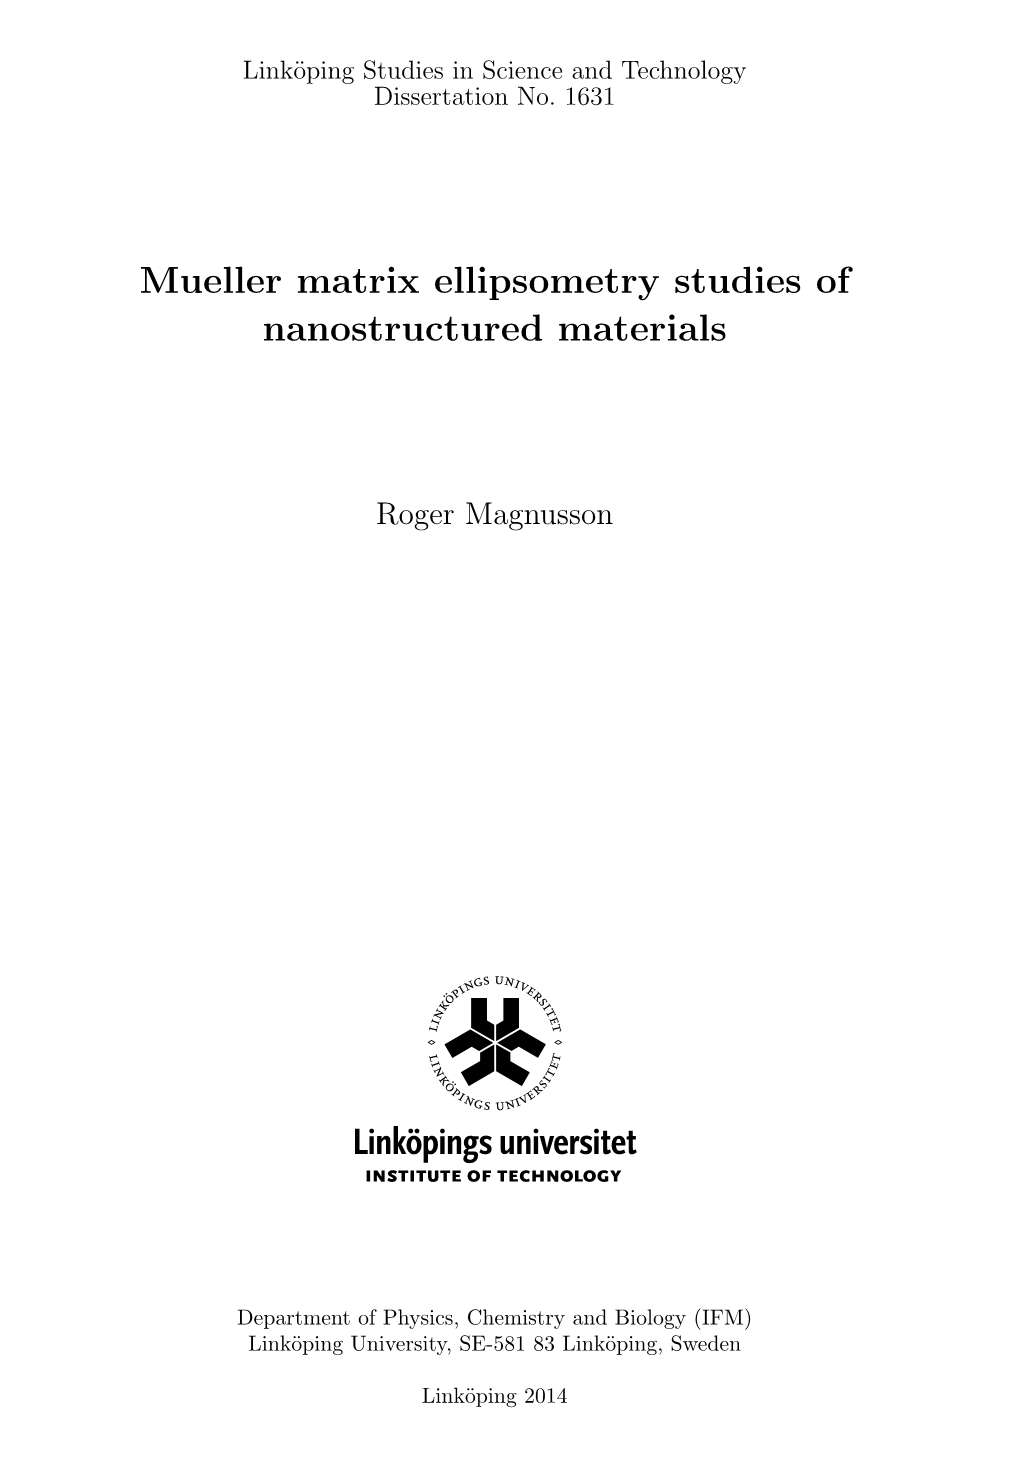 Mueller Matrix Ellipsometry Studies of Nanostructured Materials